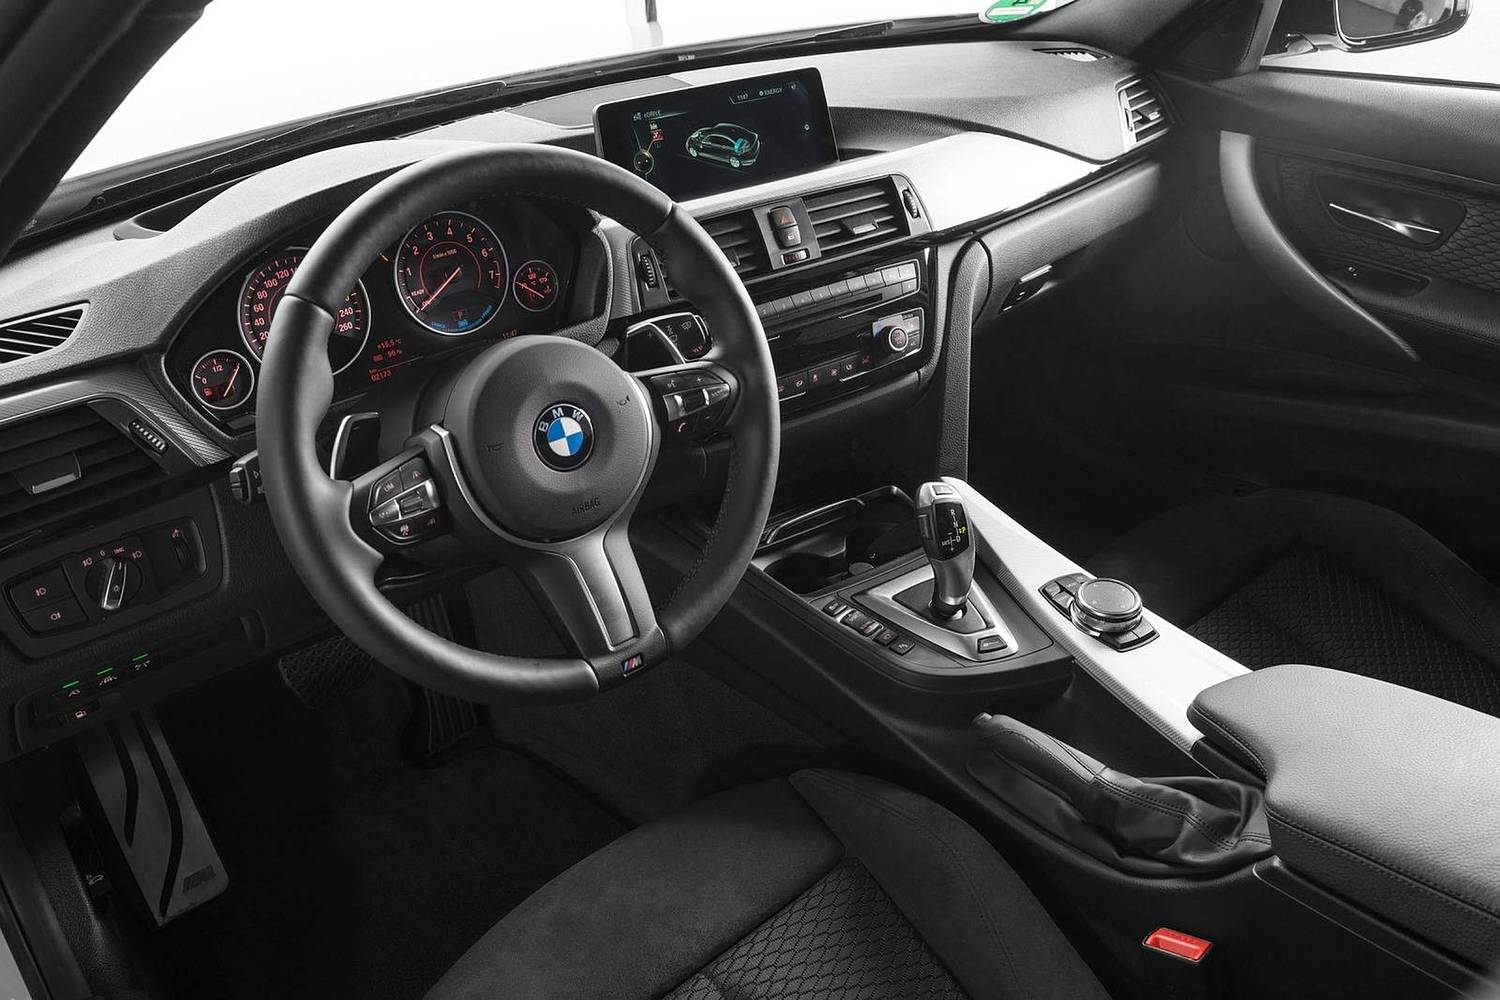 BMW 3 Series 330e iPerformance Sedan Interior (2017 model year shown)